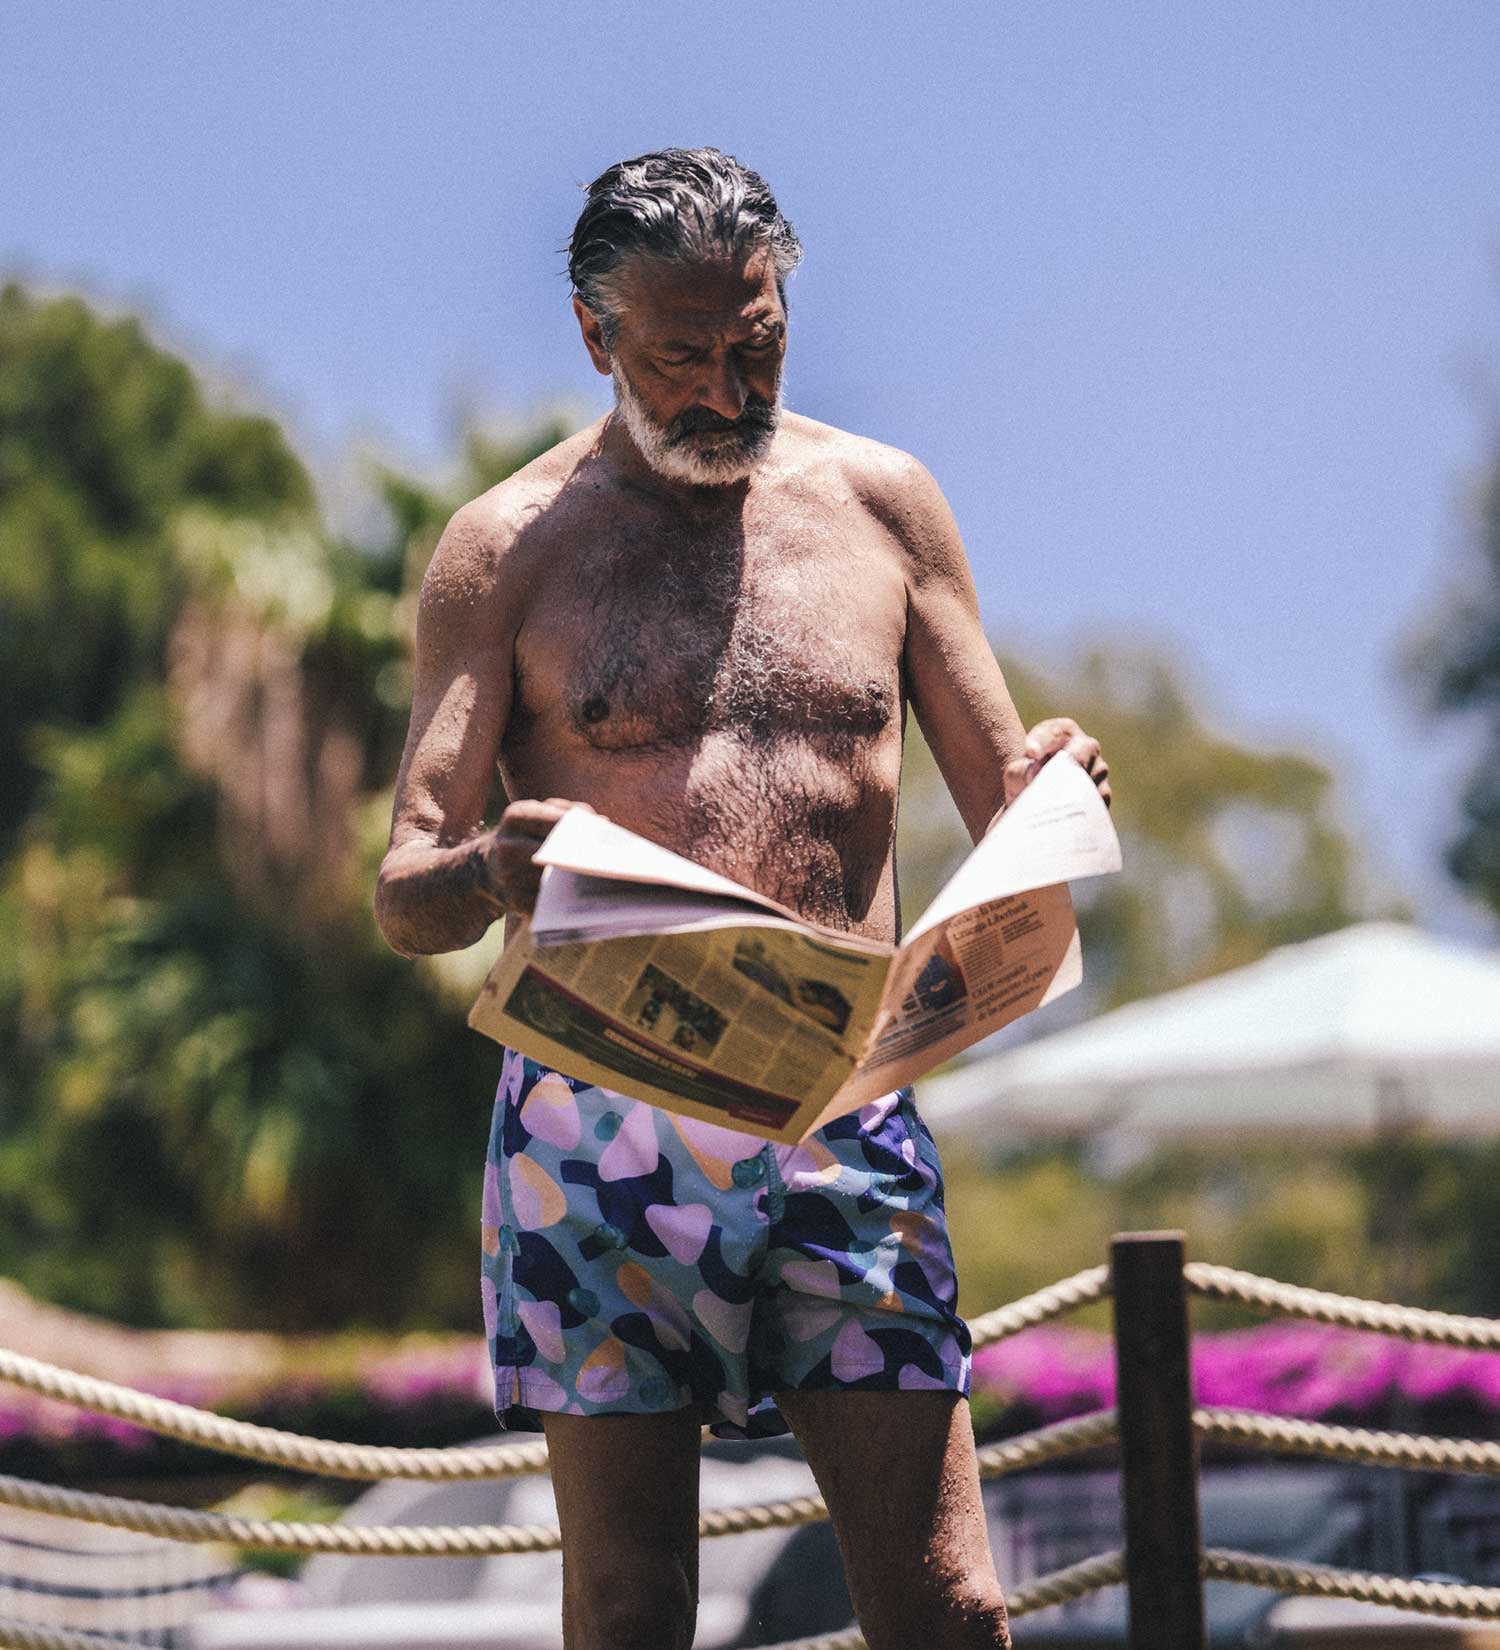 Man reading the news wearing swim trunks